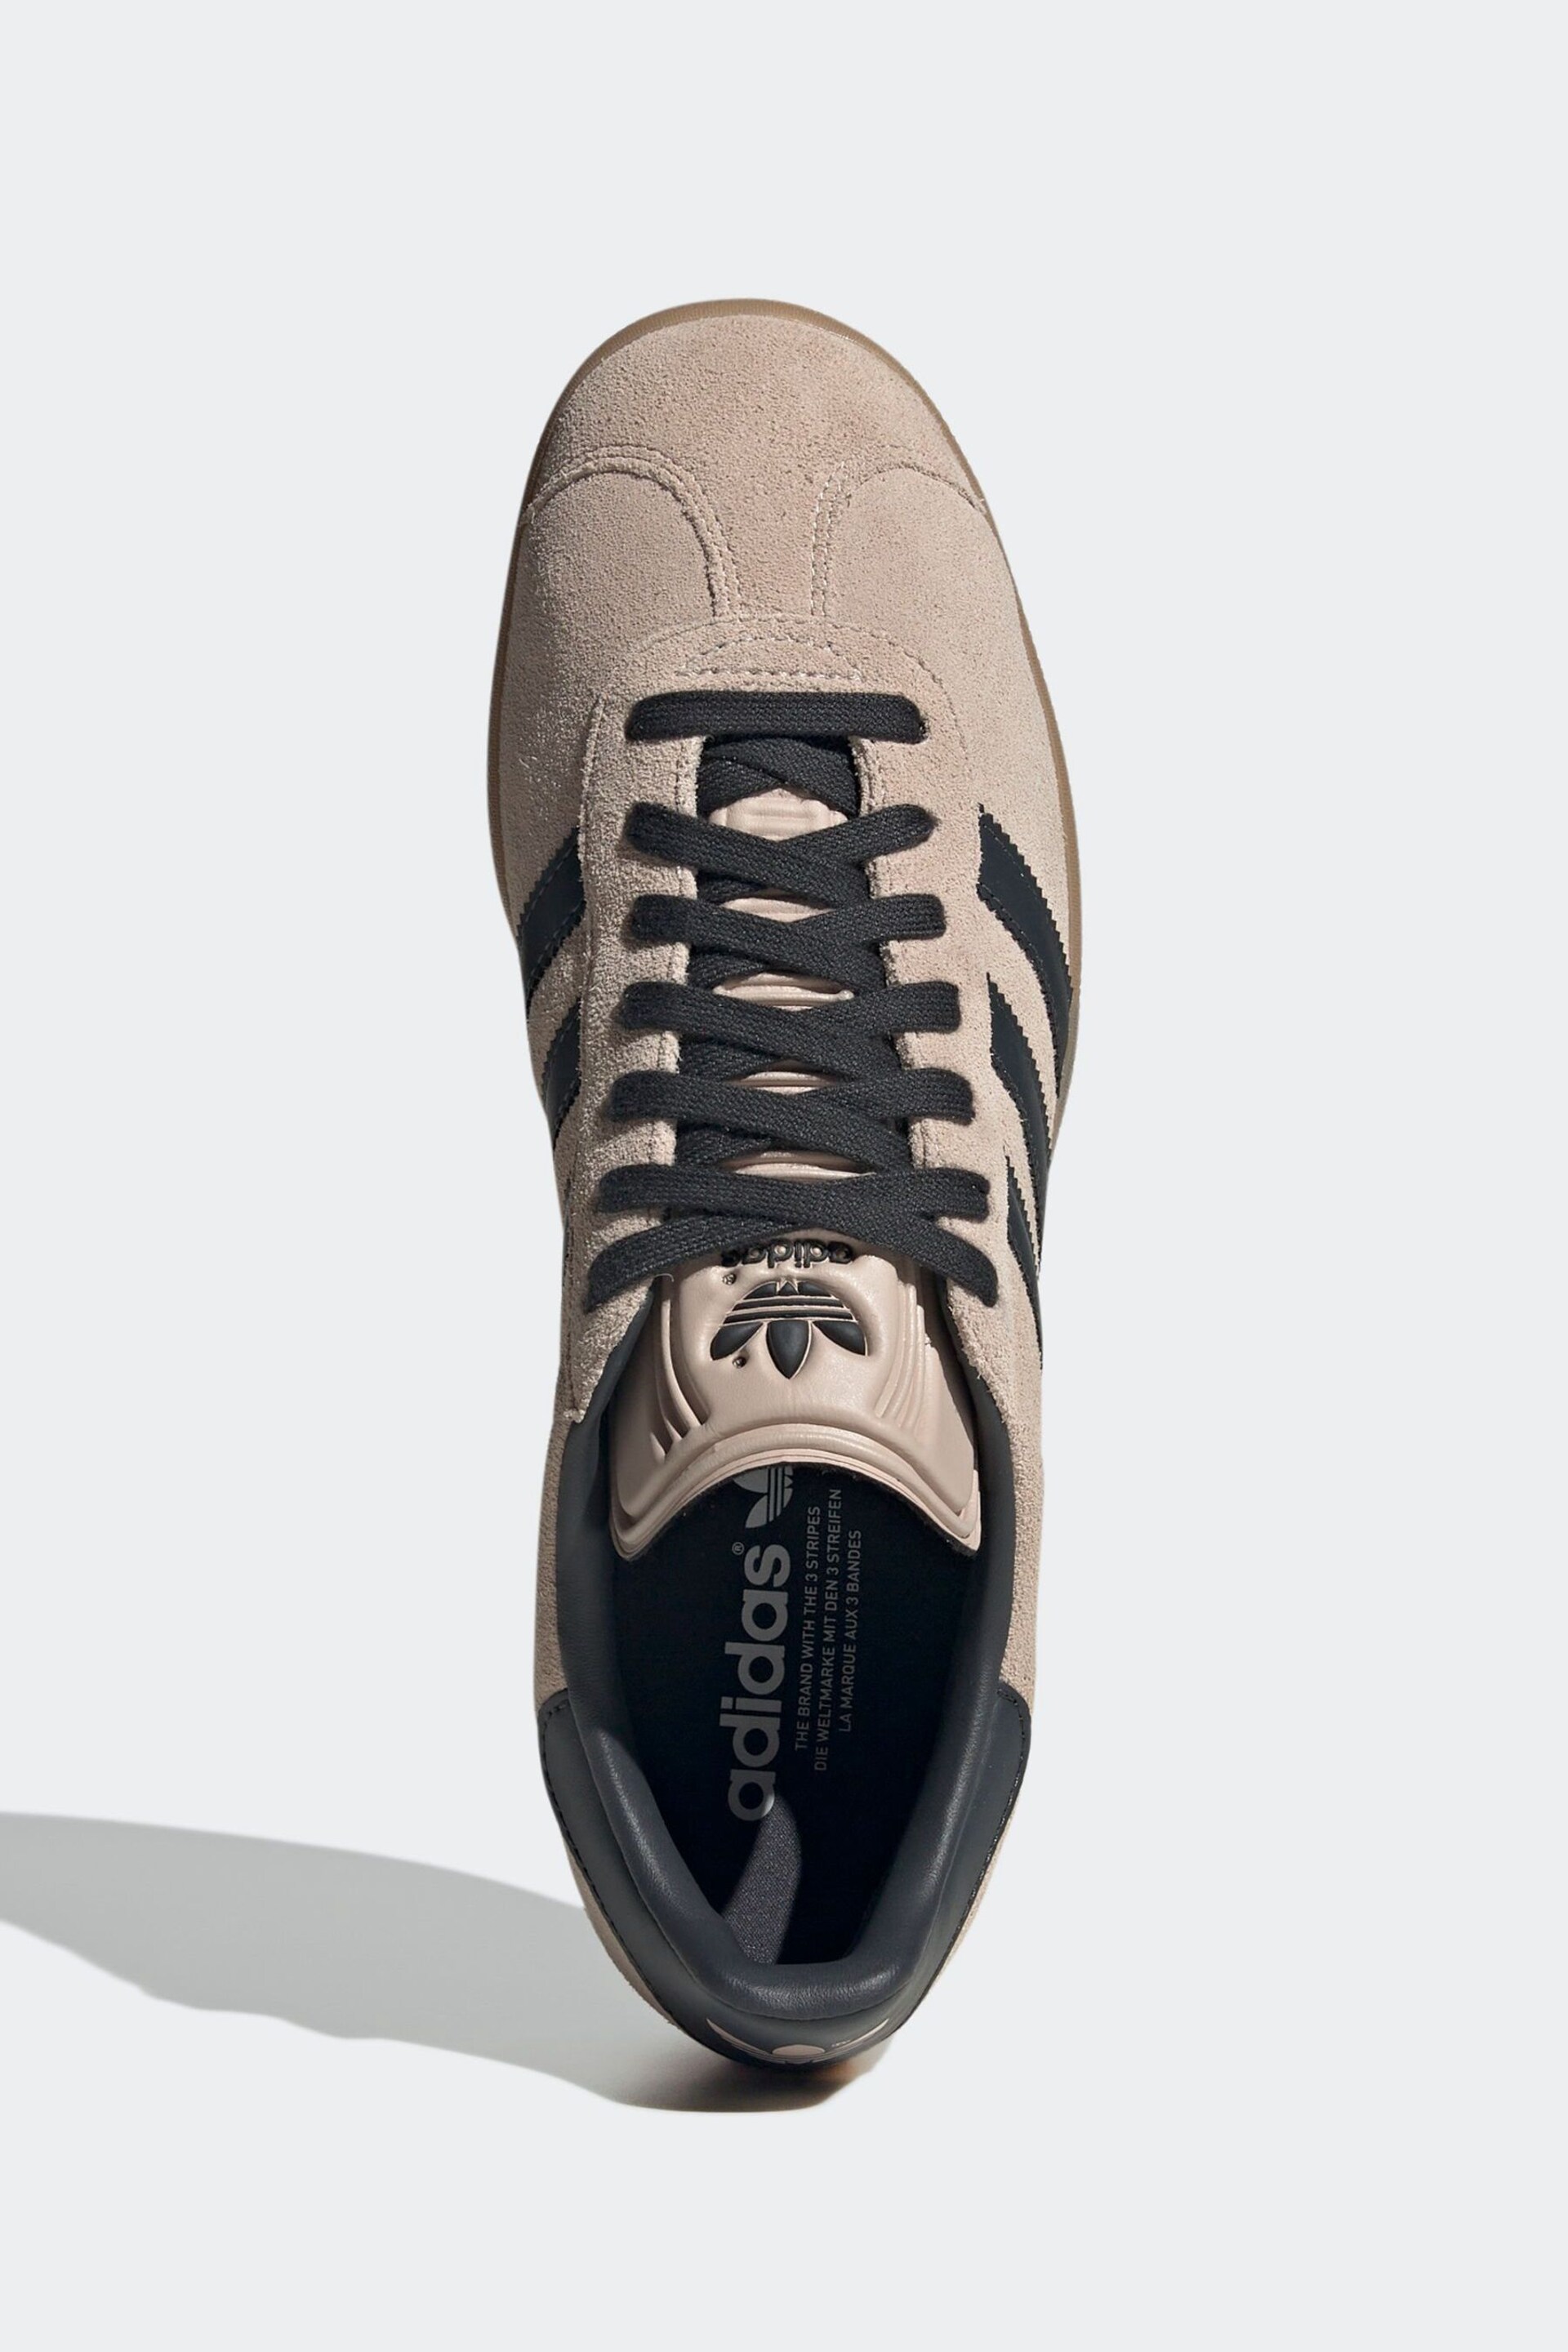 adidas Originals Gazelle Trainers - Image 9 of 11